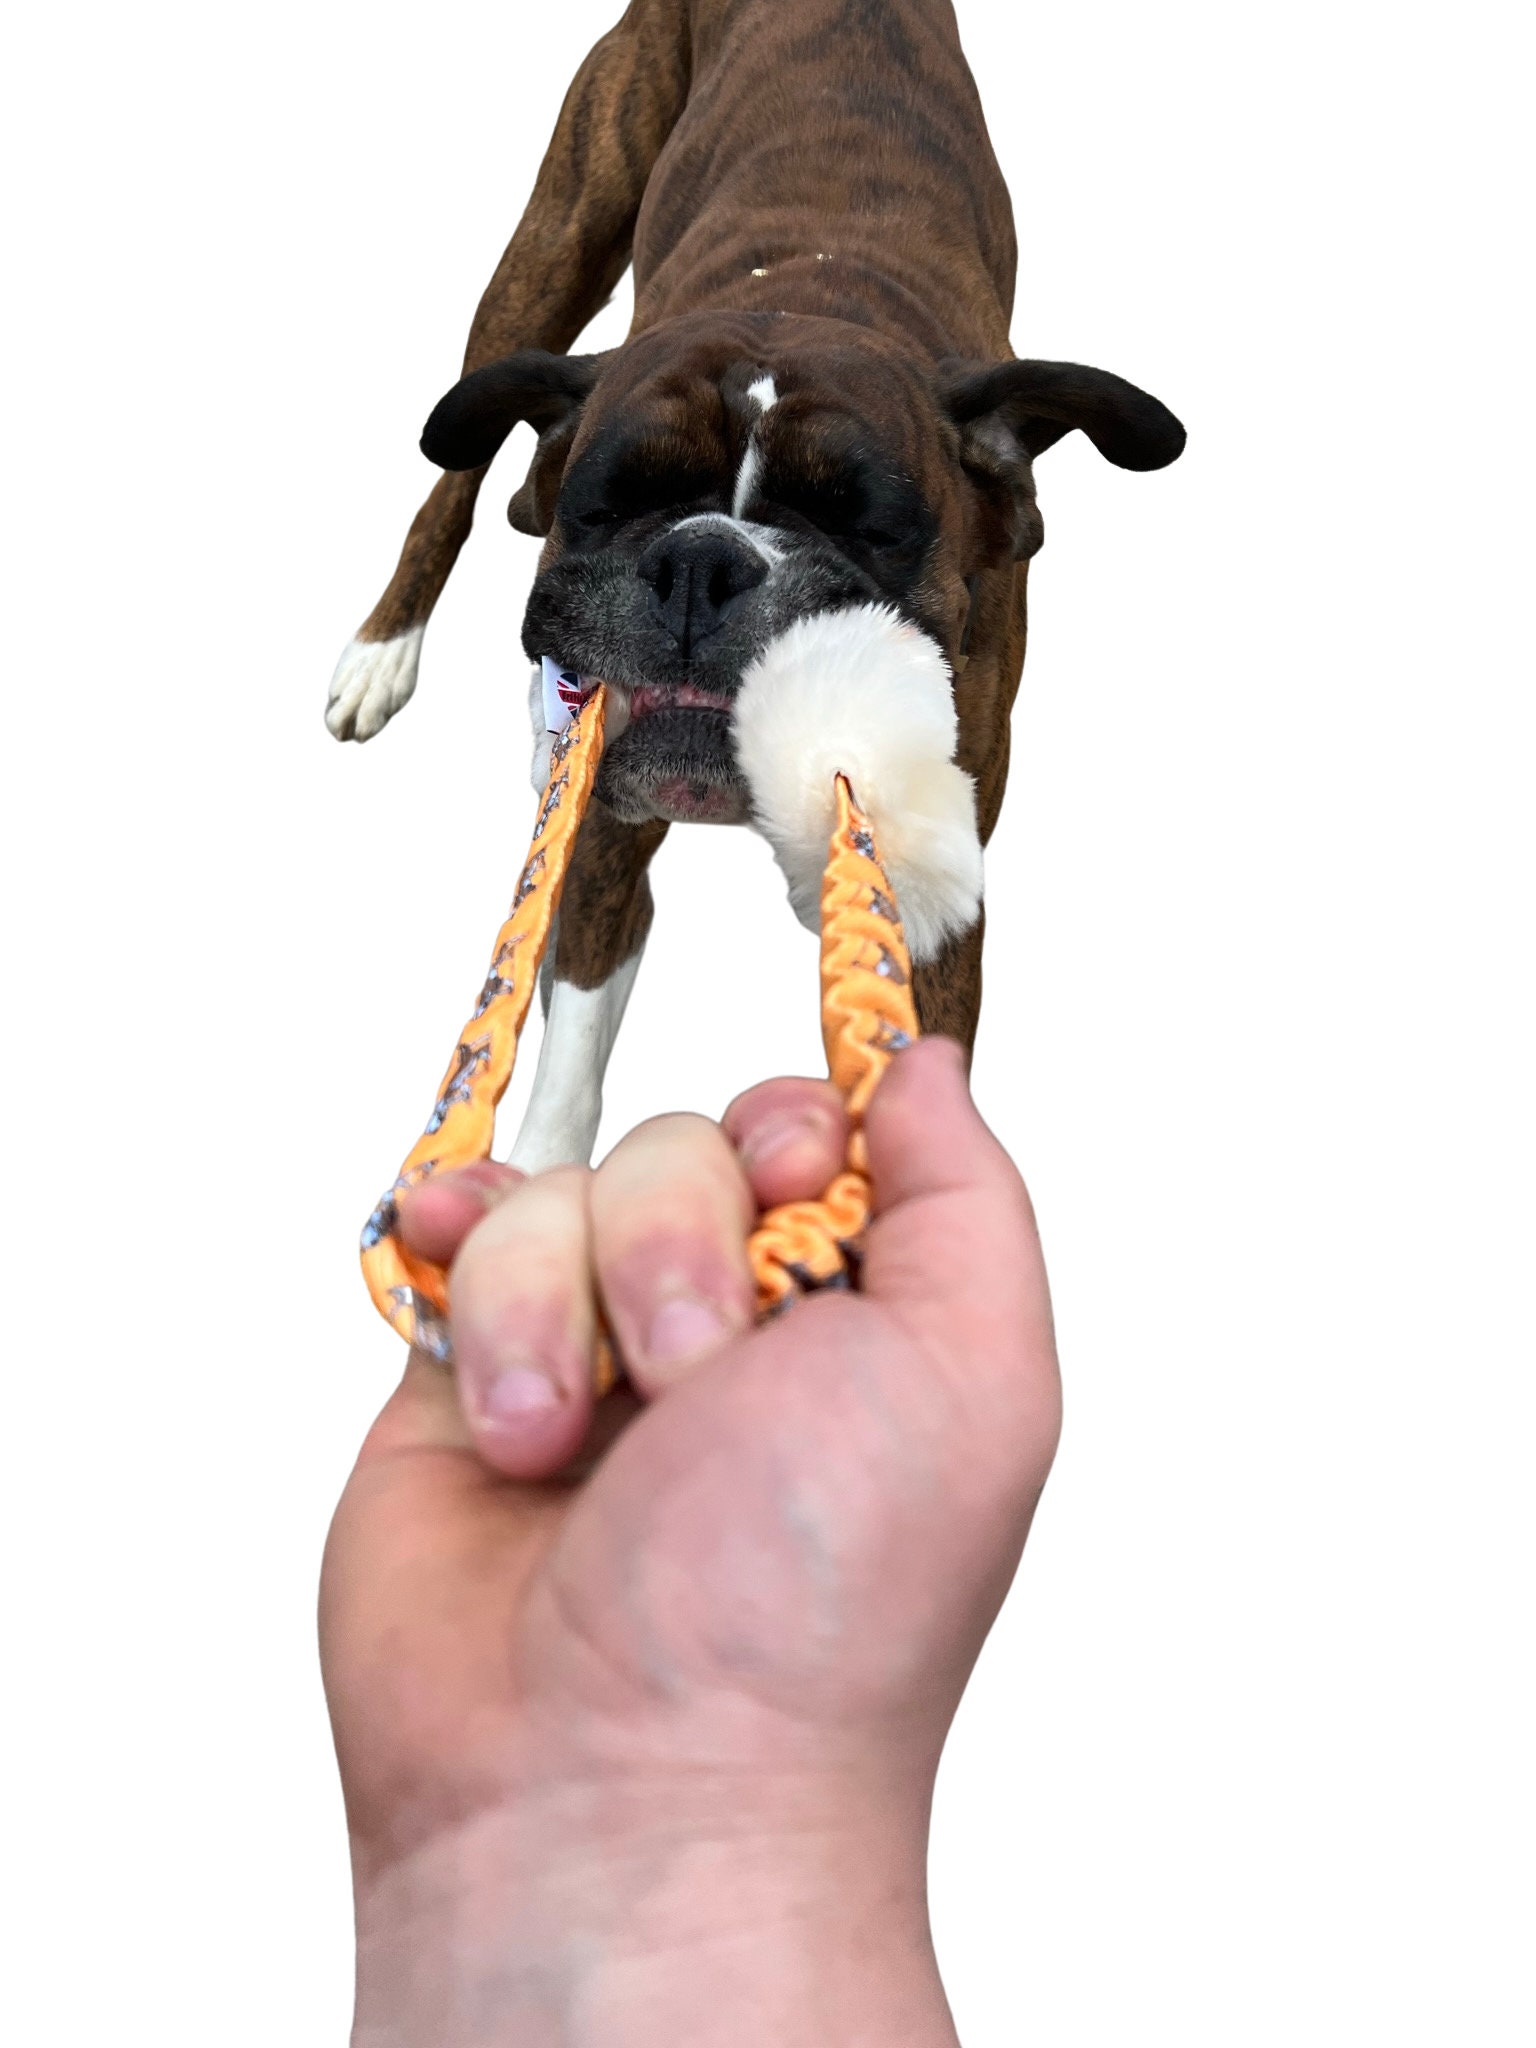 K9 Canine Pet Training Toy Indestructible Out Door Dog Tug Toys